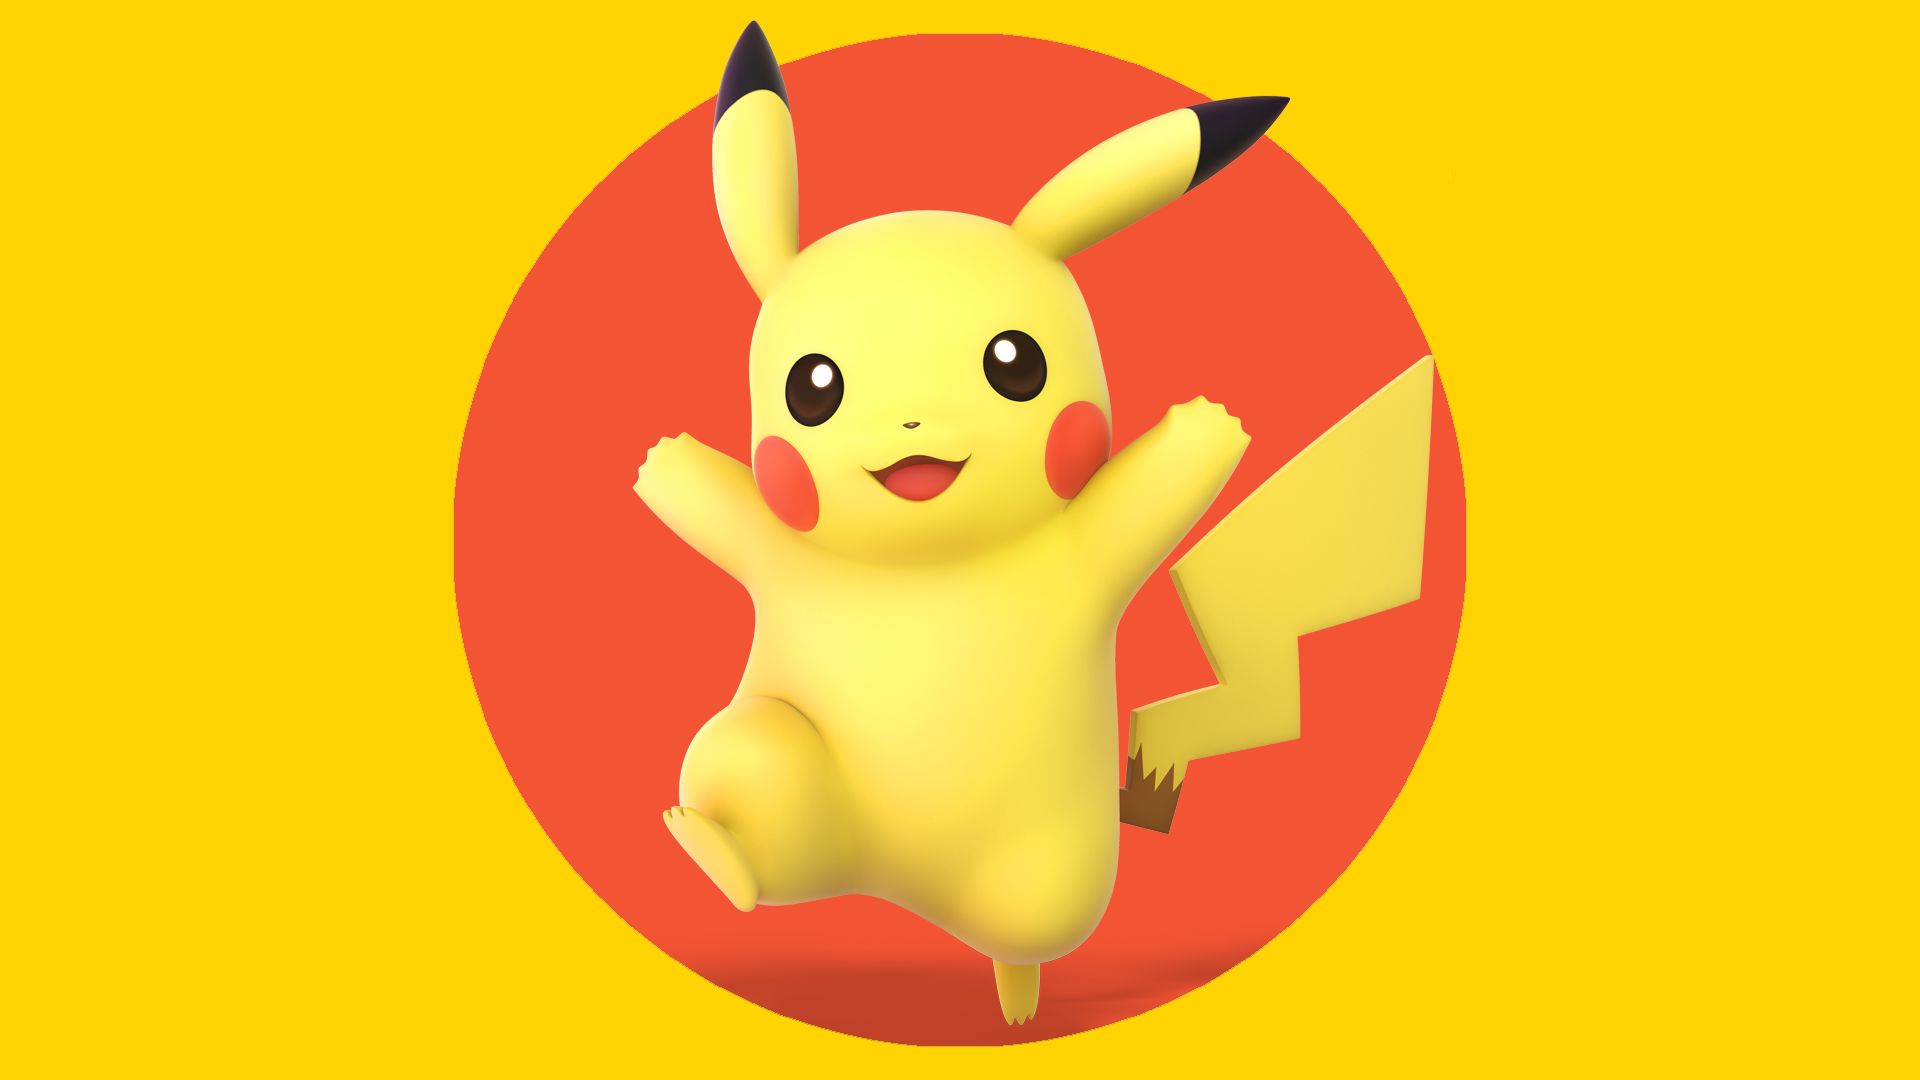 Descarga gratis la imagen Pikachu, Videojuego, Nintendô Ôru Sutâ Dairantô Sumasshu Burazâzu, Super Smash Bros Ultimate en el escritorio de tu PC